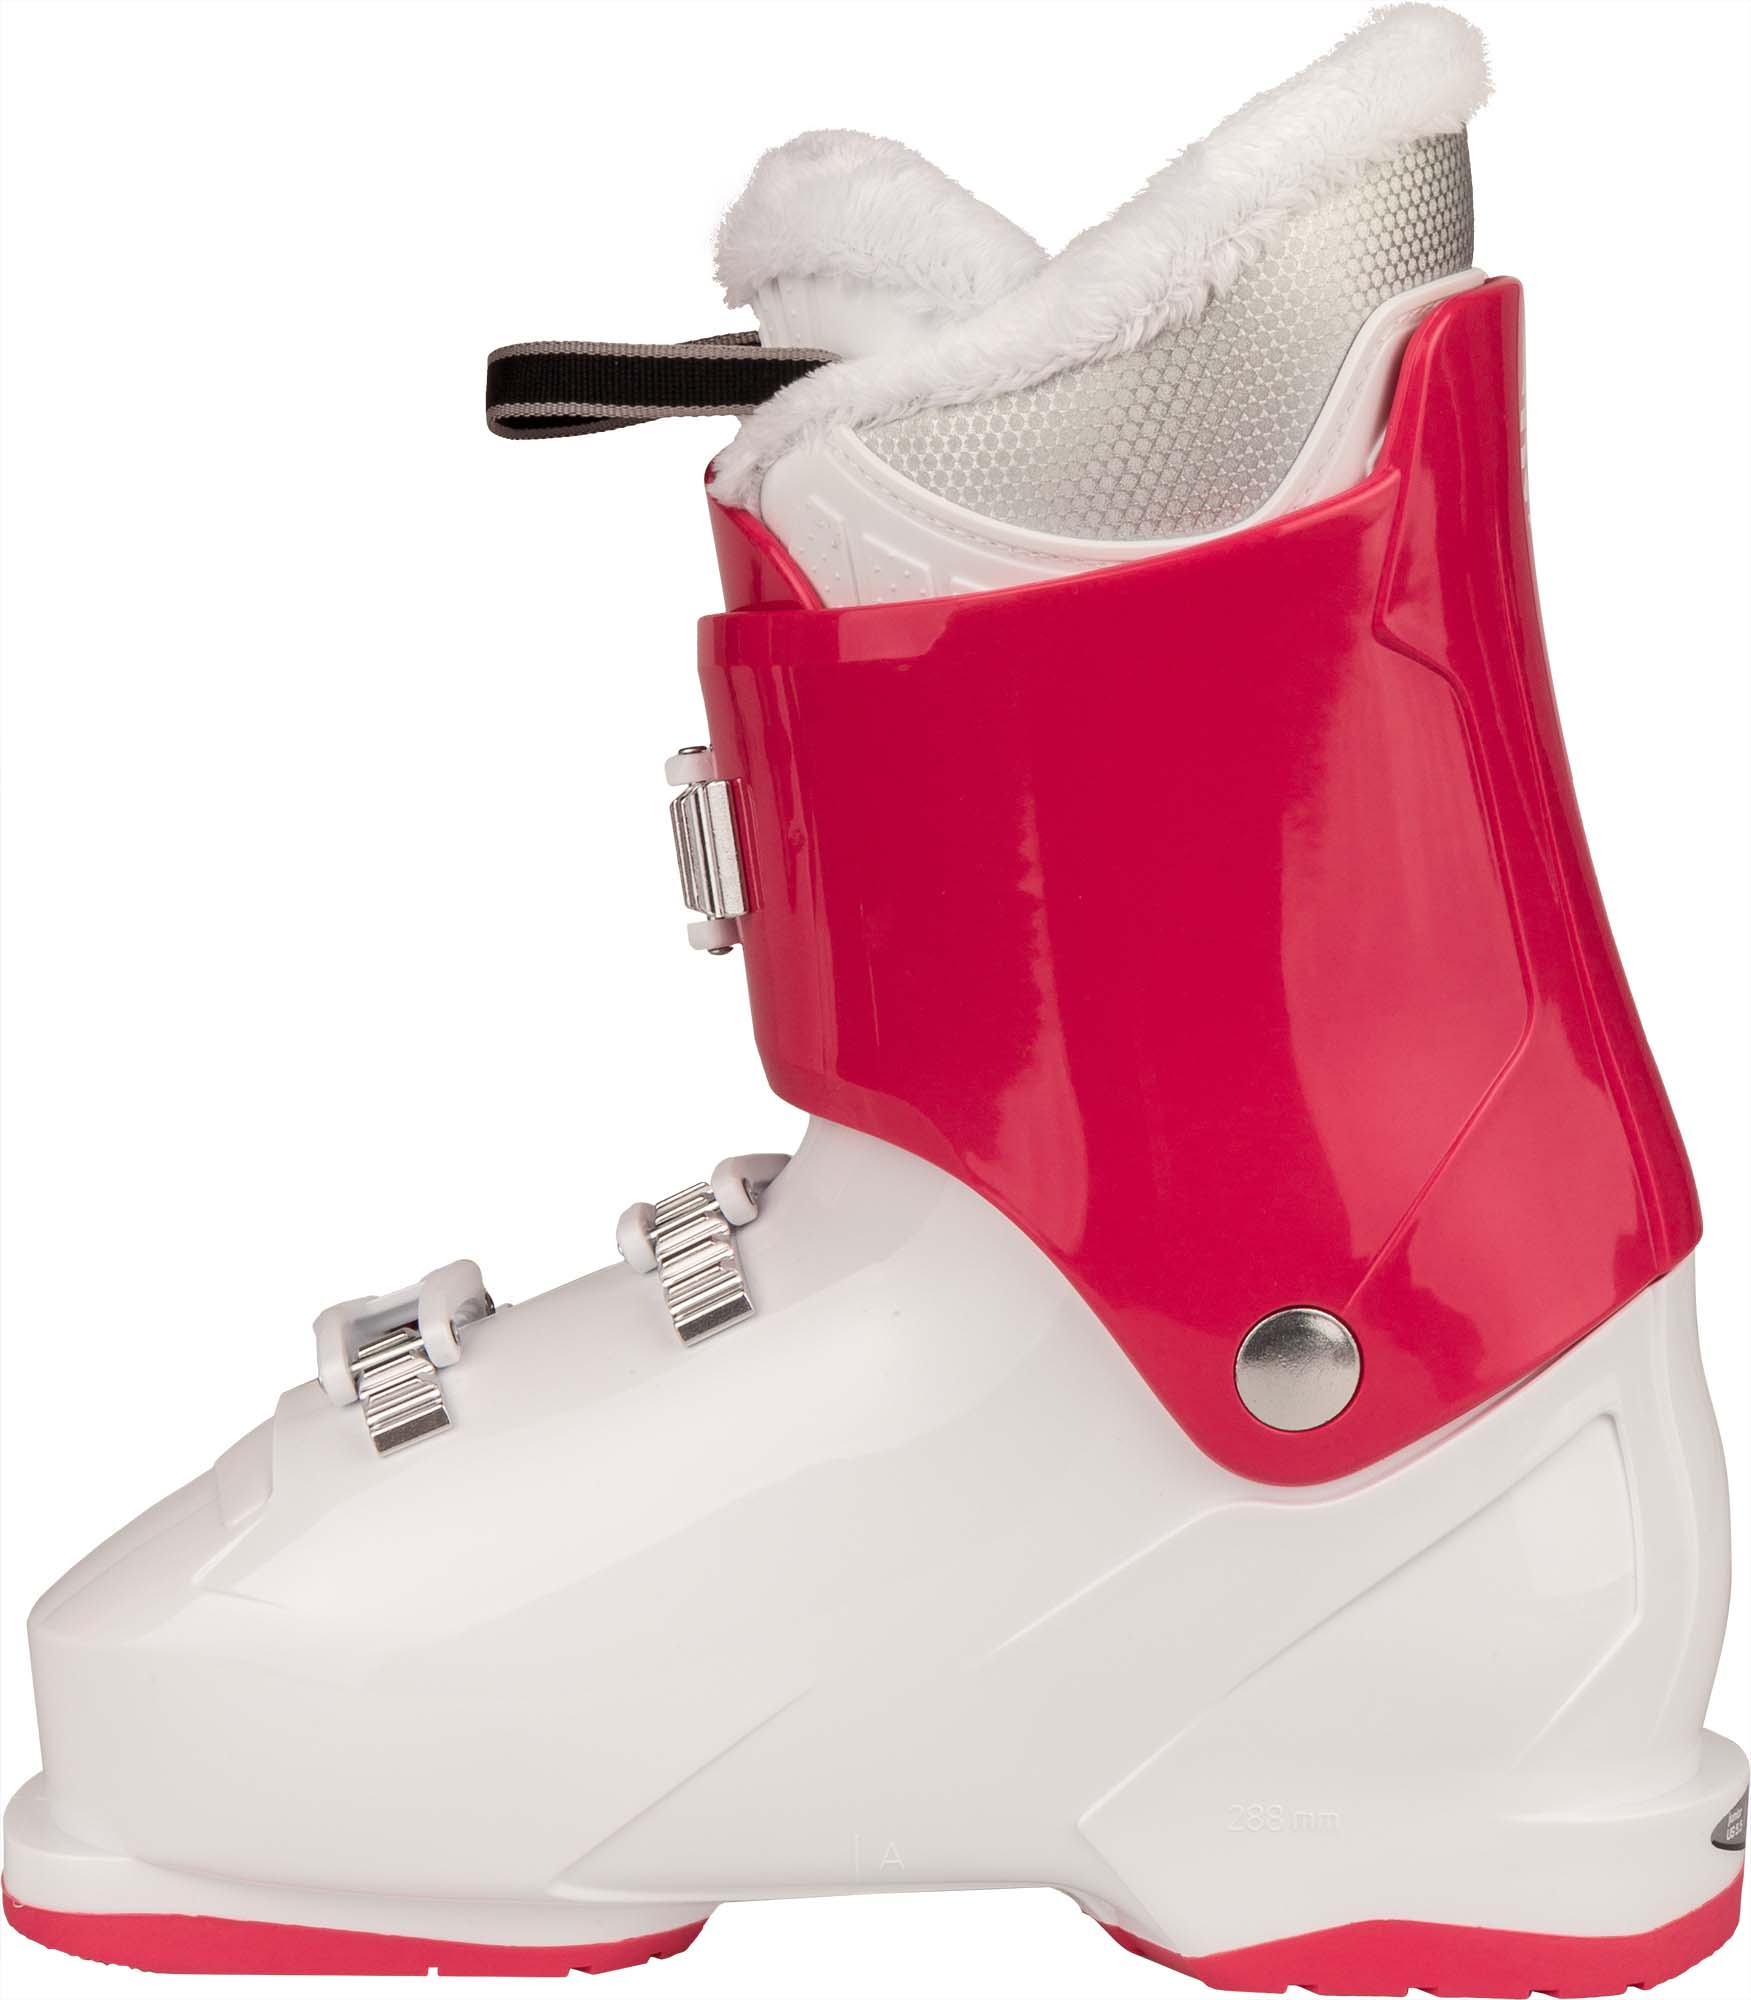 Girls’ downhill ski boots